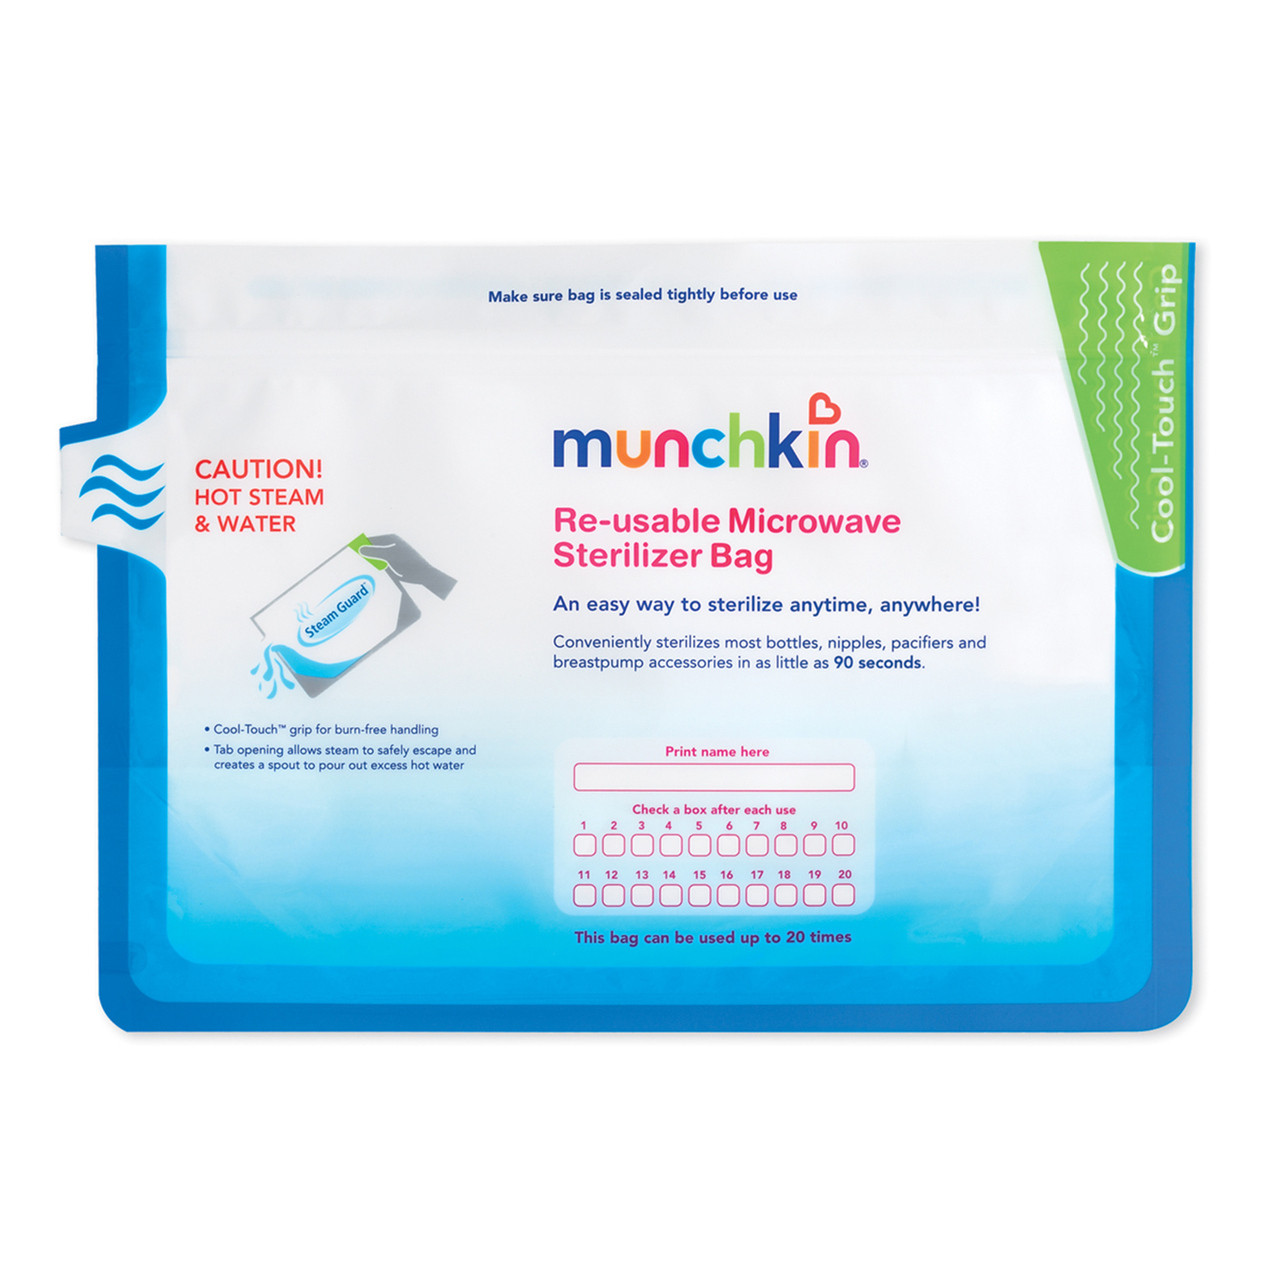 munchkin microwave sterilizer